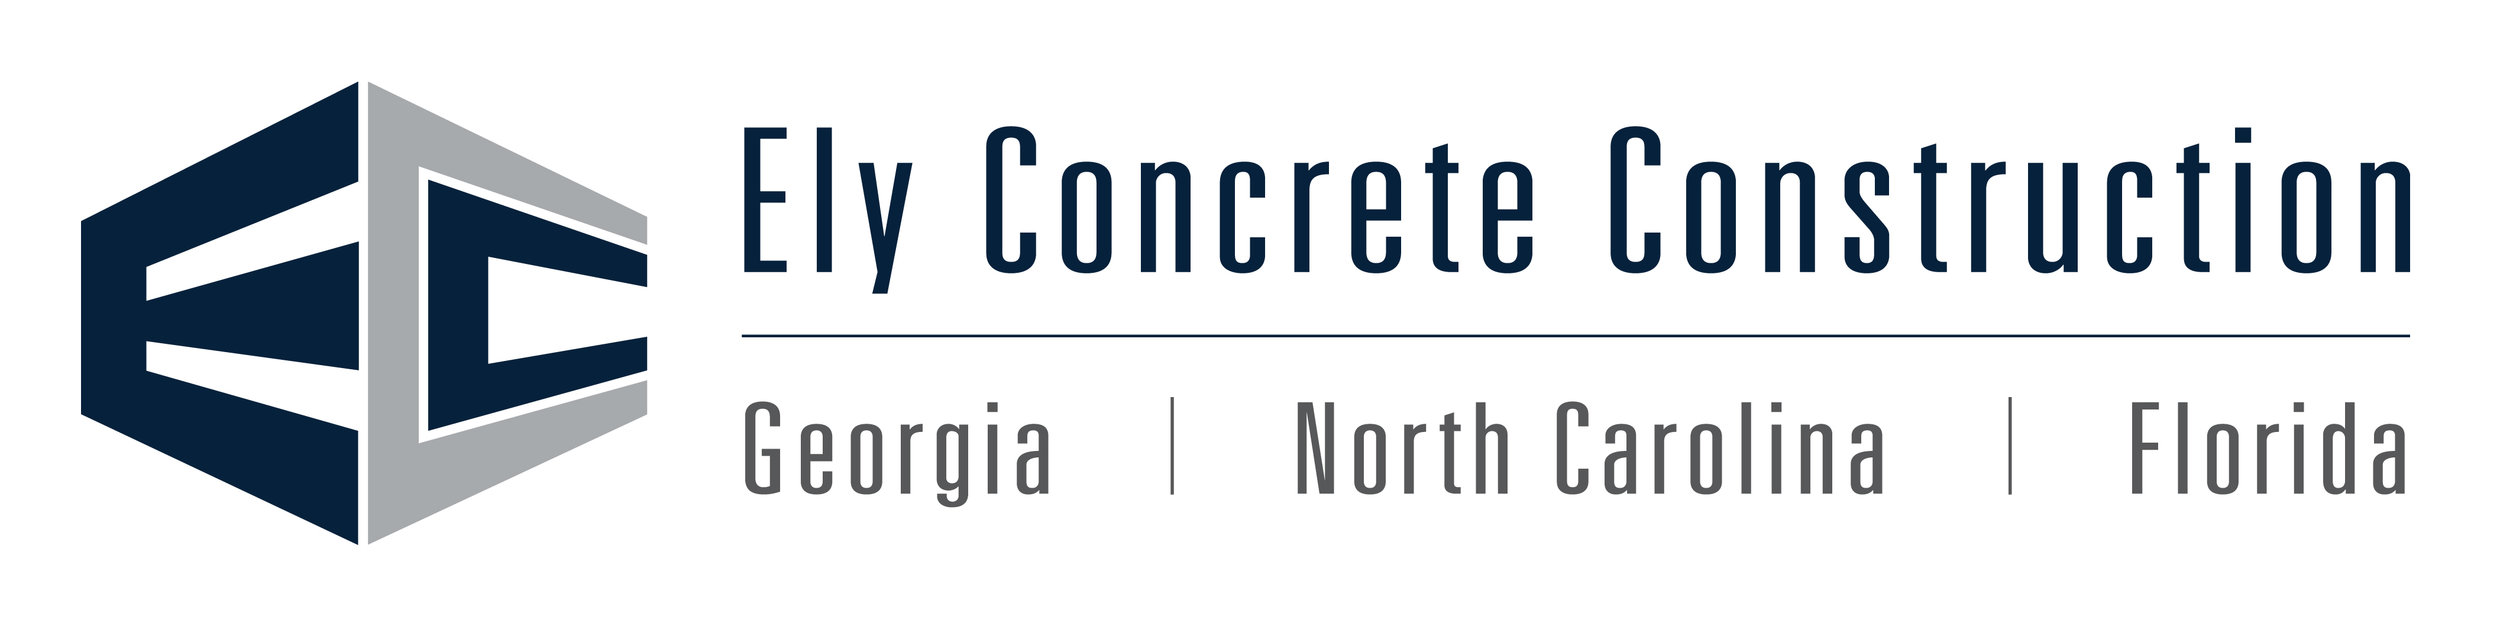 Ely_Concrete-Logo.jpg